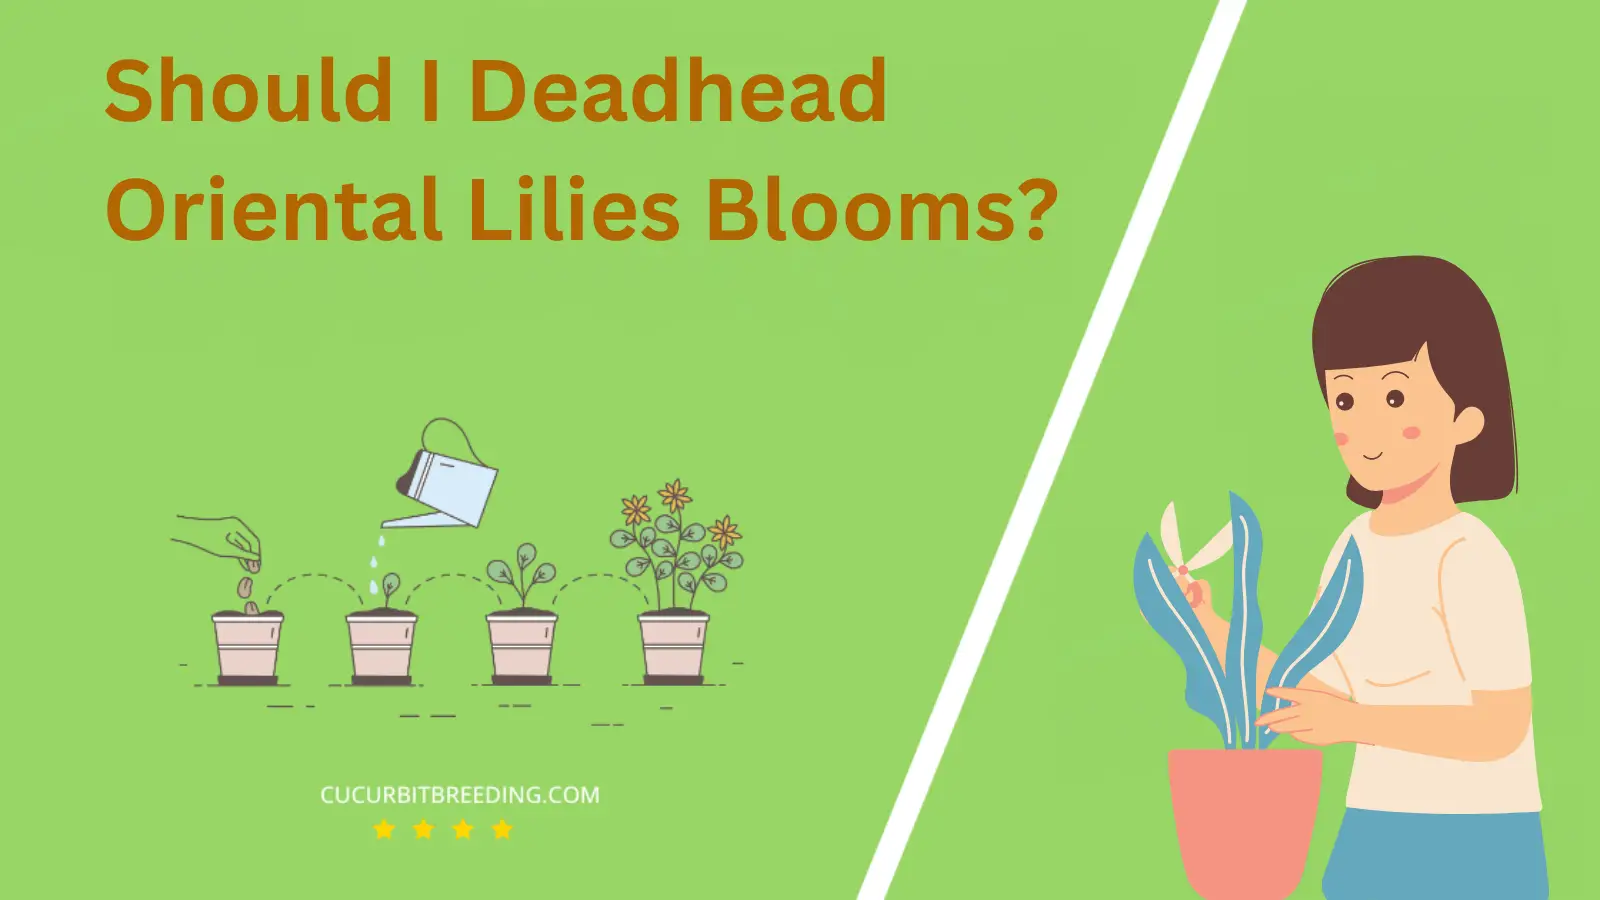 Should I Deadhead Oriental Lilies Blooms?